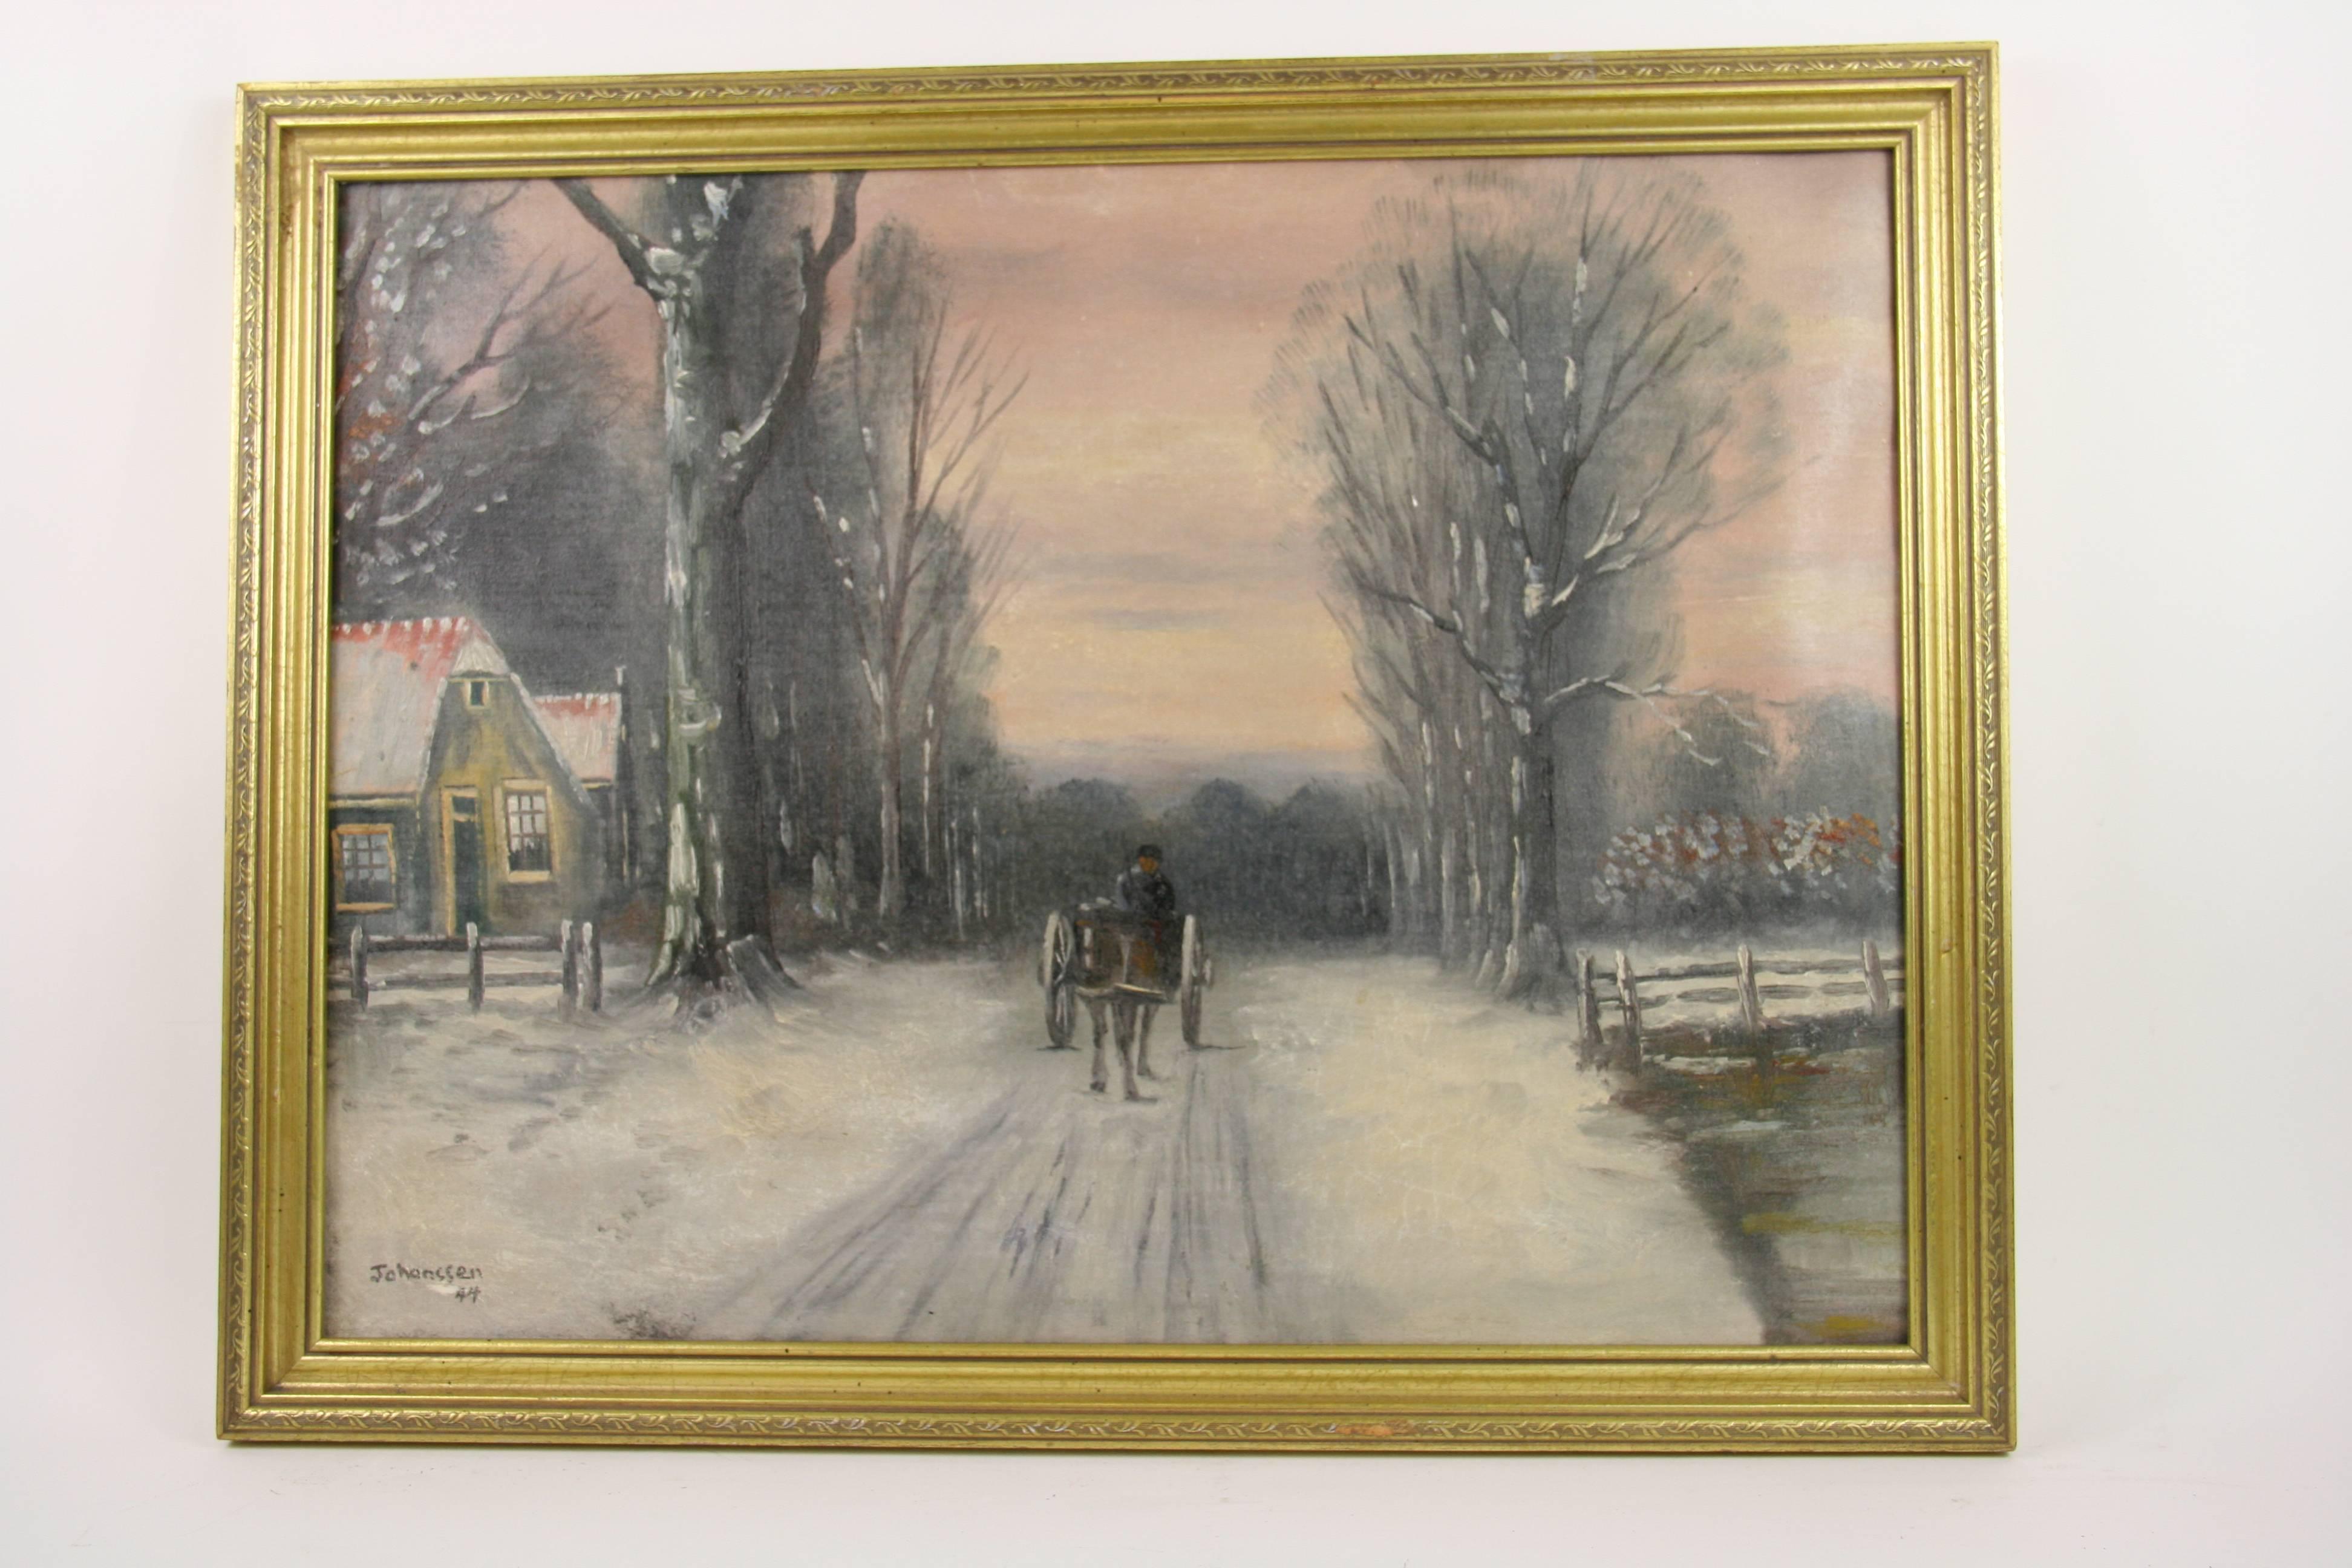 Jahanssen Landscape Painting - Antique Horse and Carriage  Danish  Winter Landscape Oil  Painting circa 1940